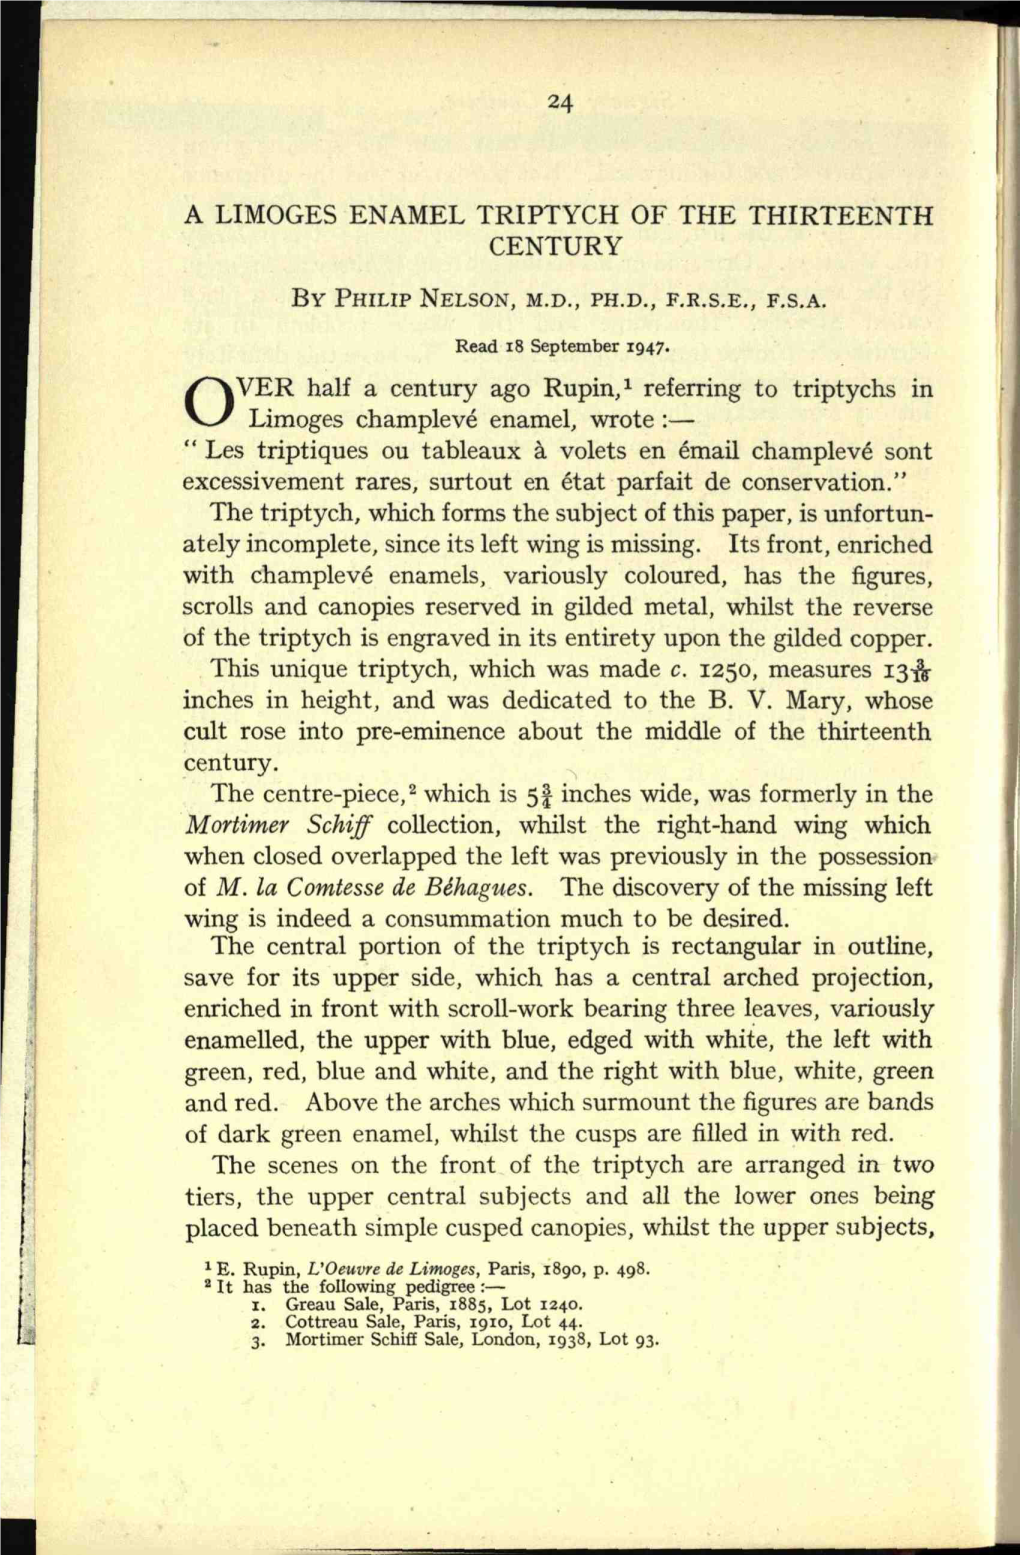 A LIMOGES ENAMEL TRIPTYCH of the THIRTEENTH CENTURY by PHILIP NELSON, M.D., PH.D., F.R.S.E., F.S.A. OVER Half a Century Ago Rupi